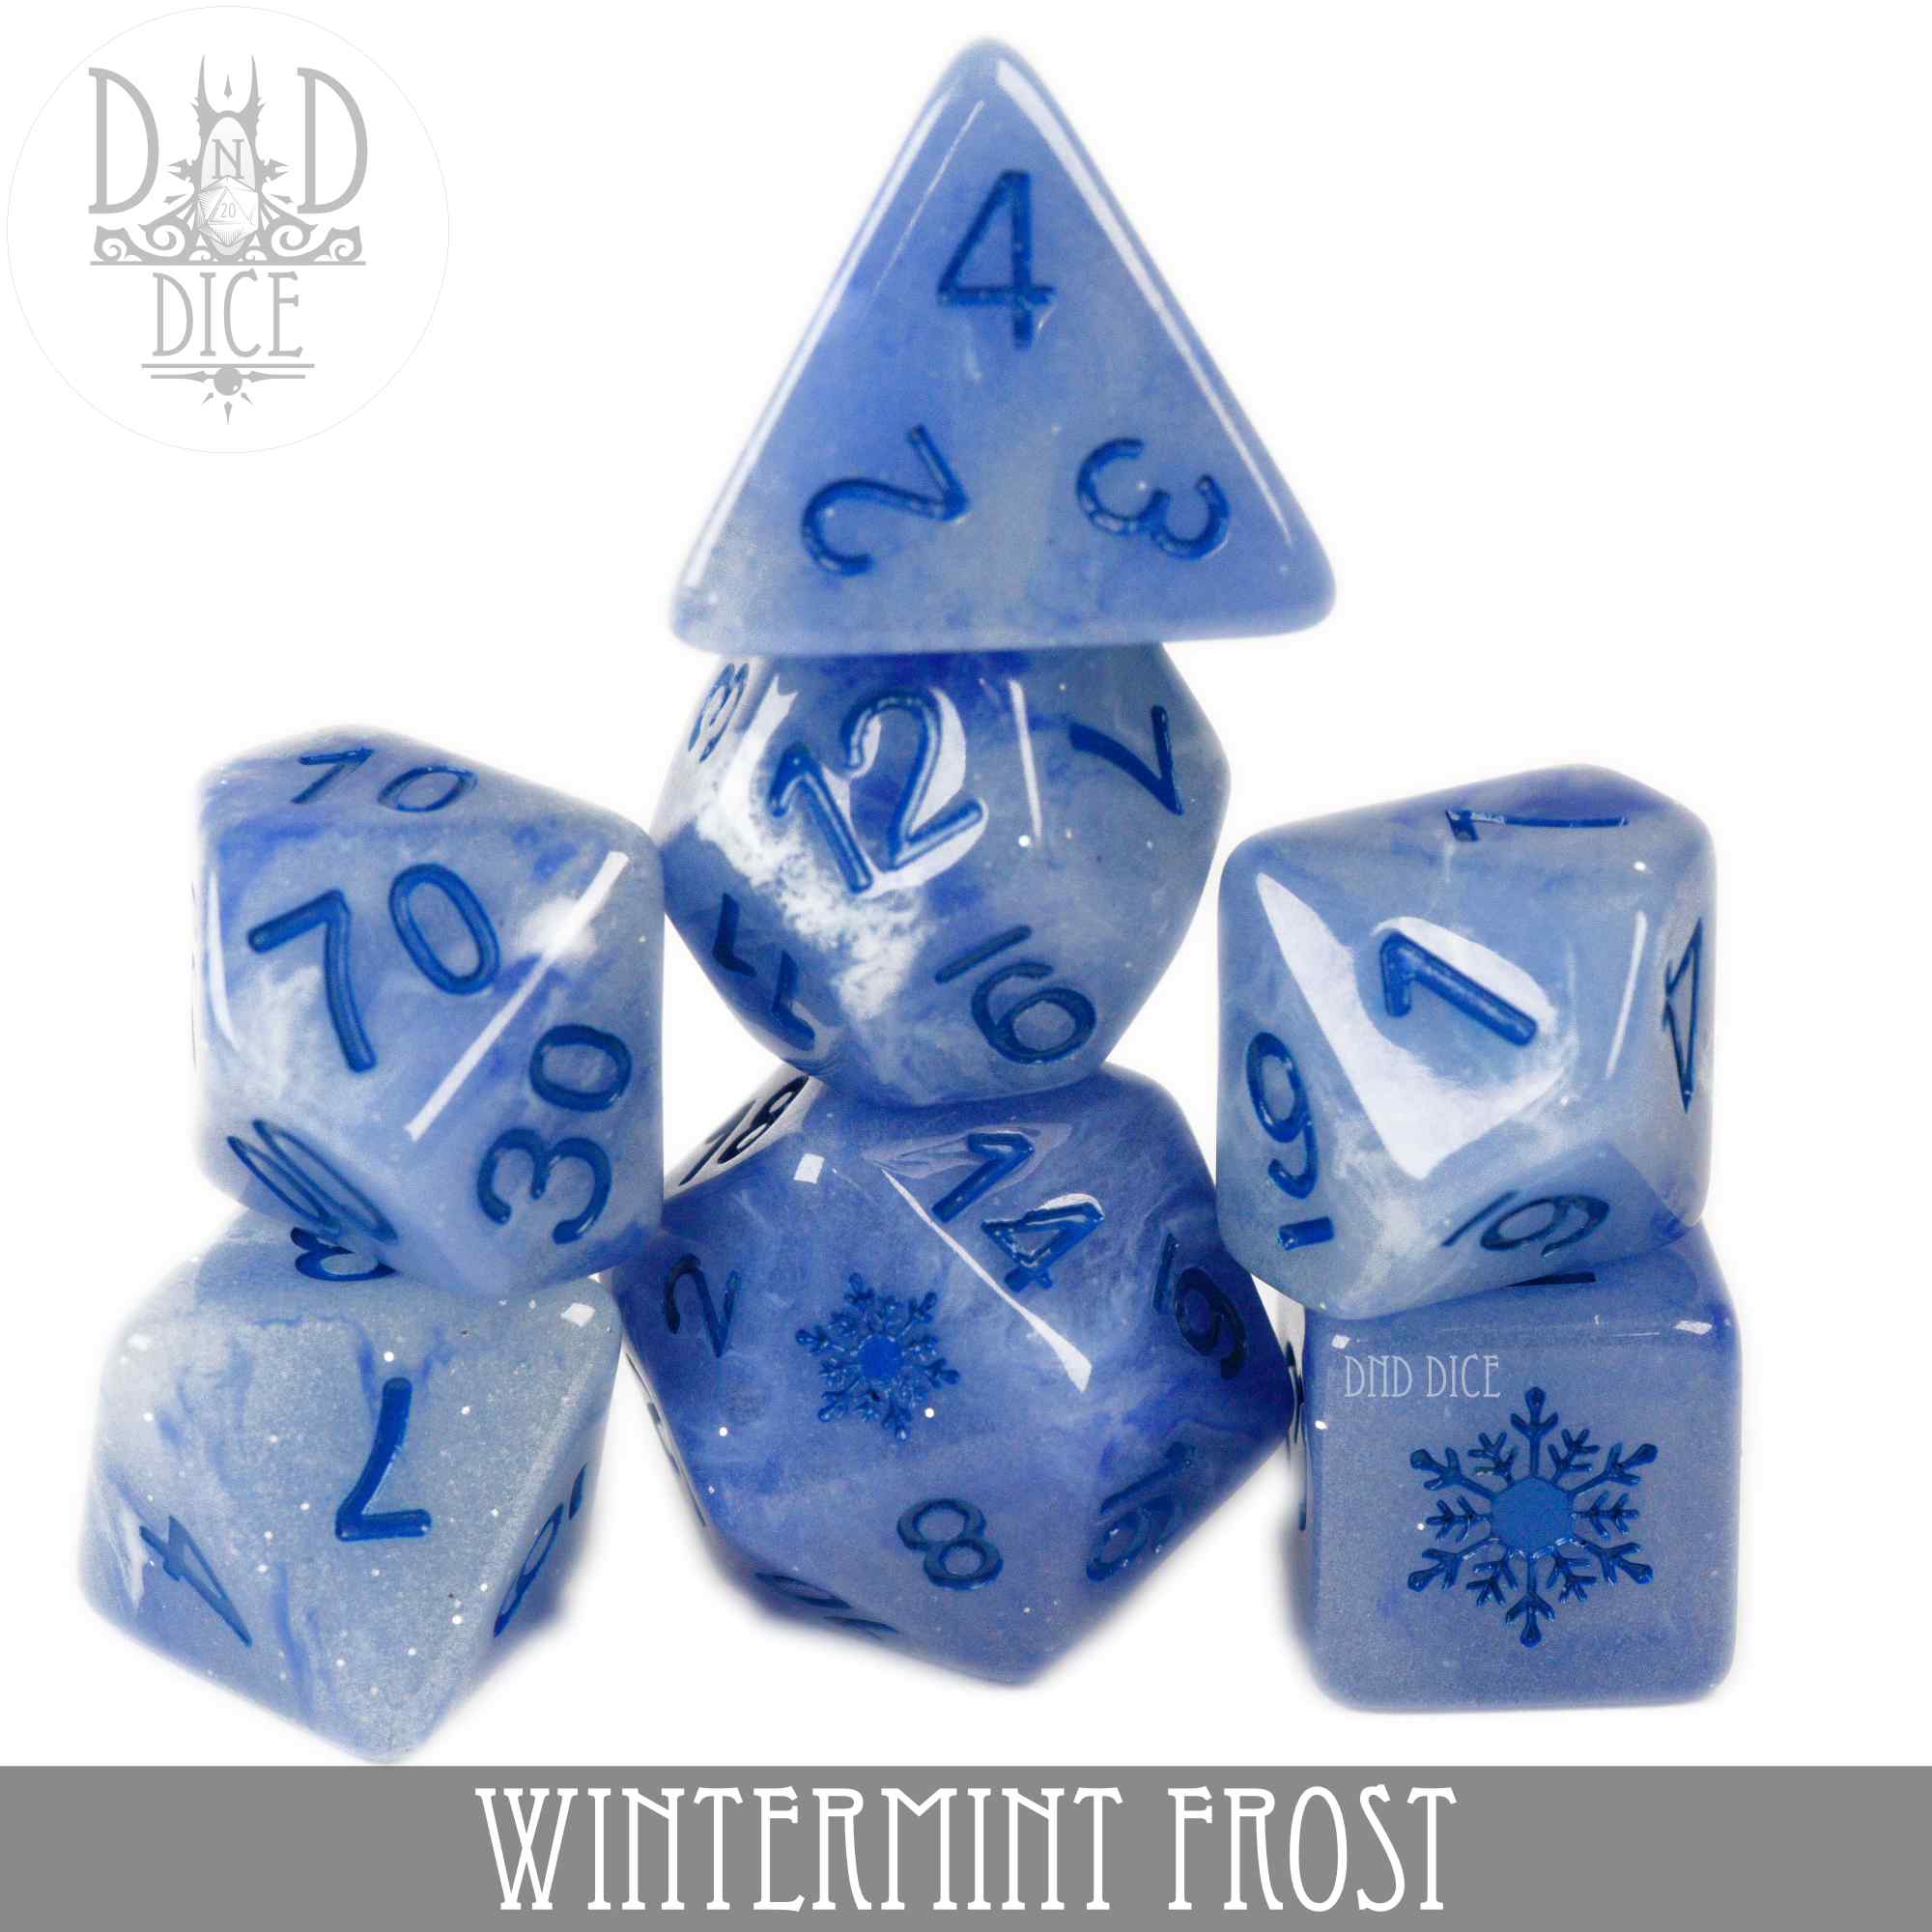 Wintermint Frost Dice Set